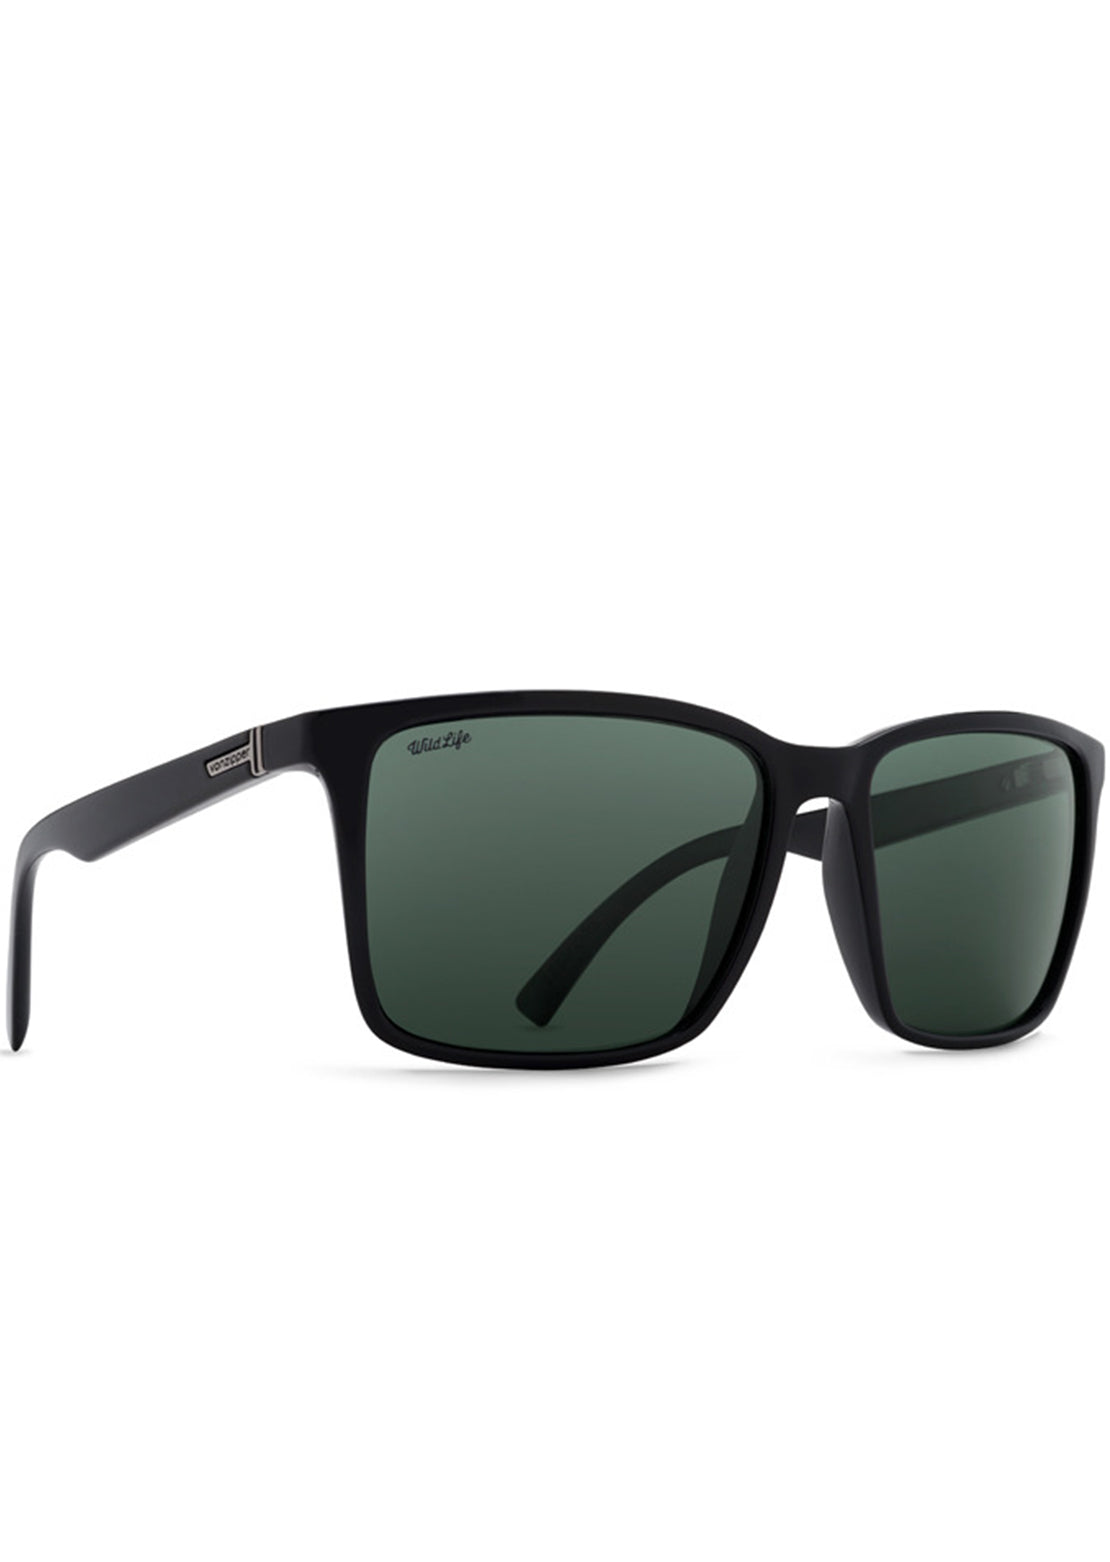 Von Zipper Lesmore Sunglasses Black Gloss/Vintage Grey